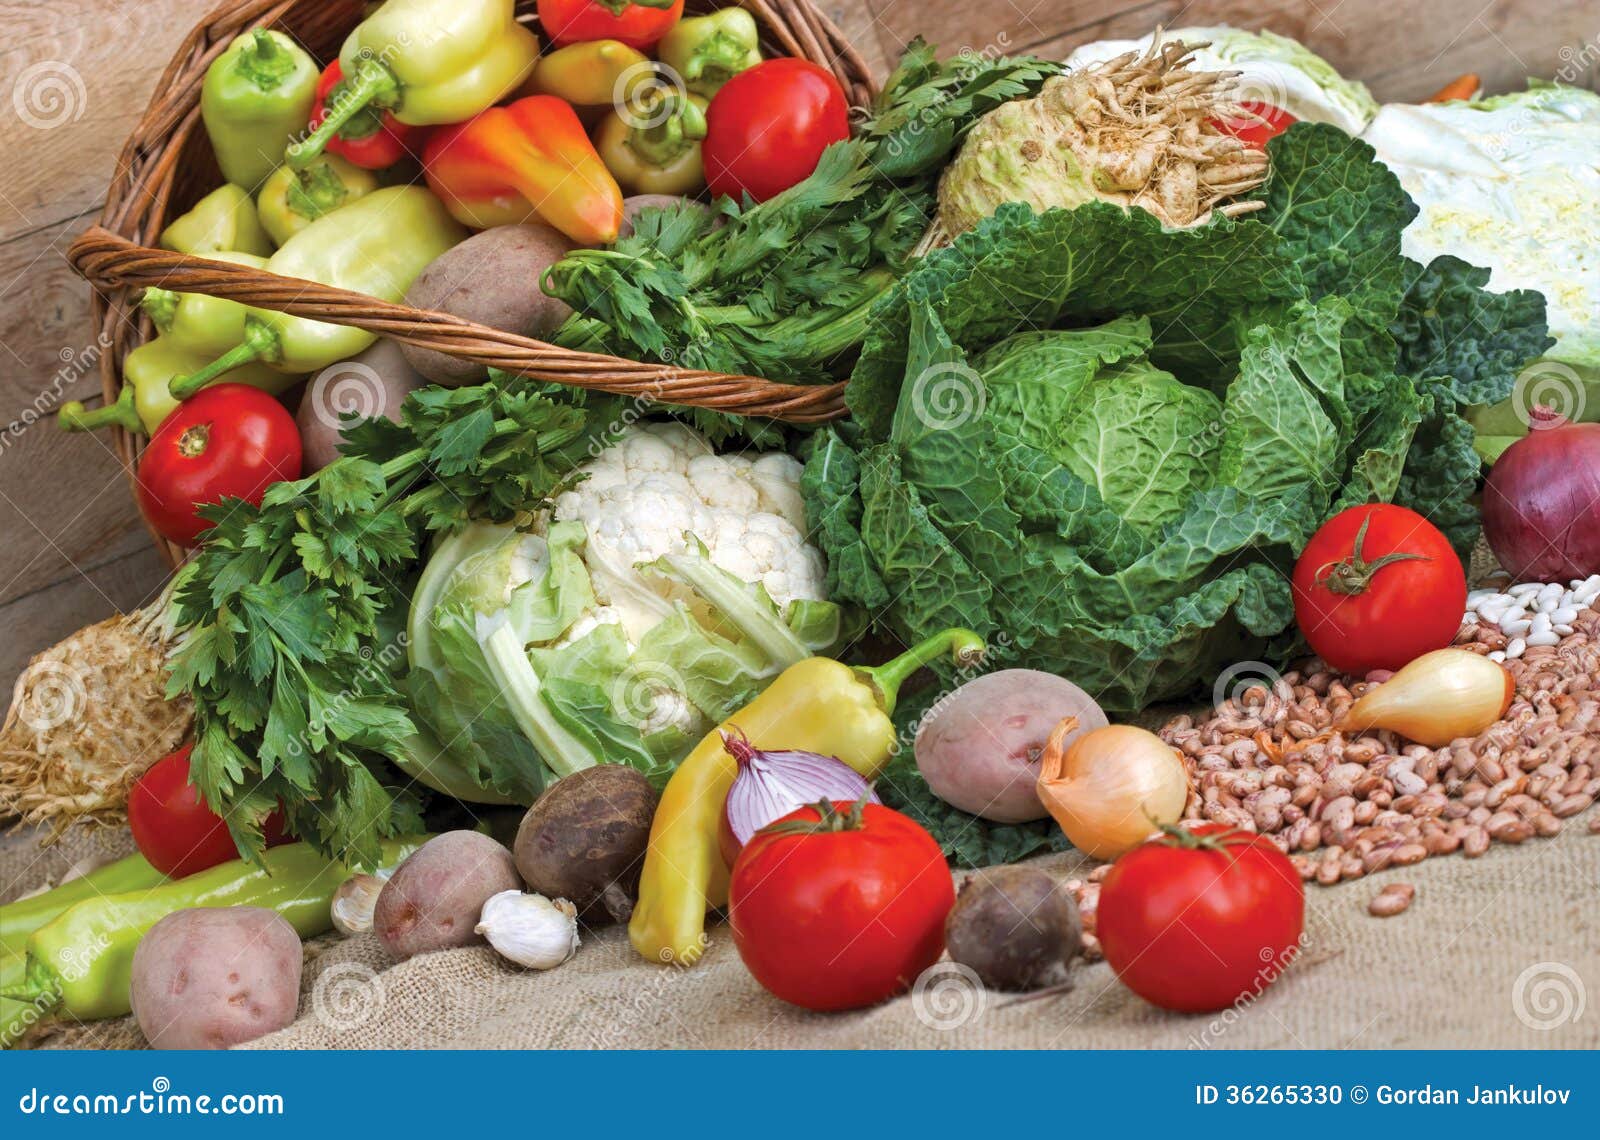 Fresh vegetables organic vegetables in a wicker basket.